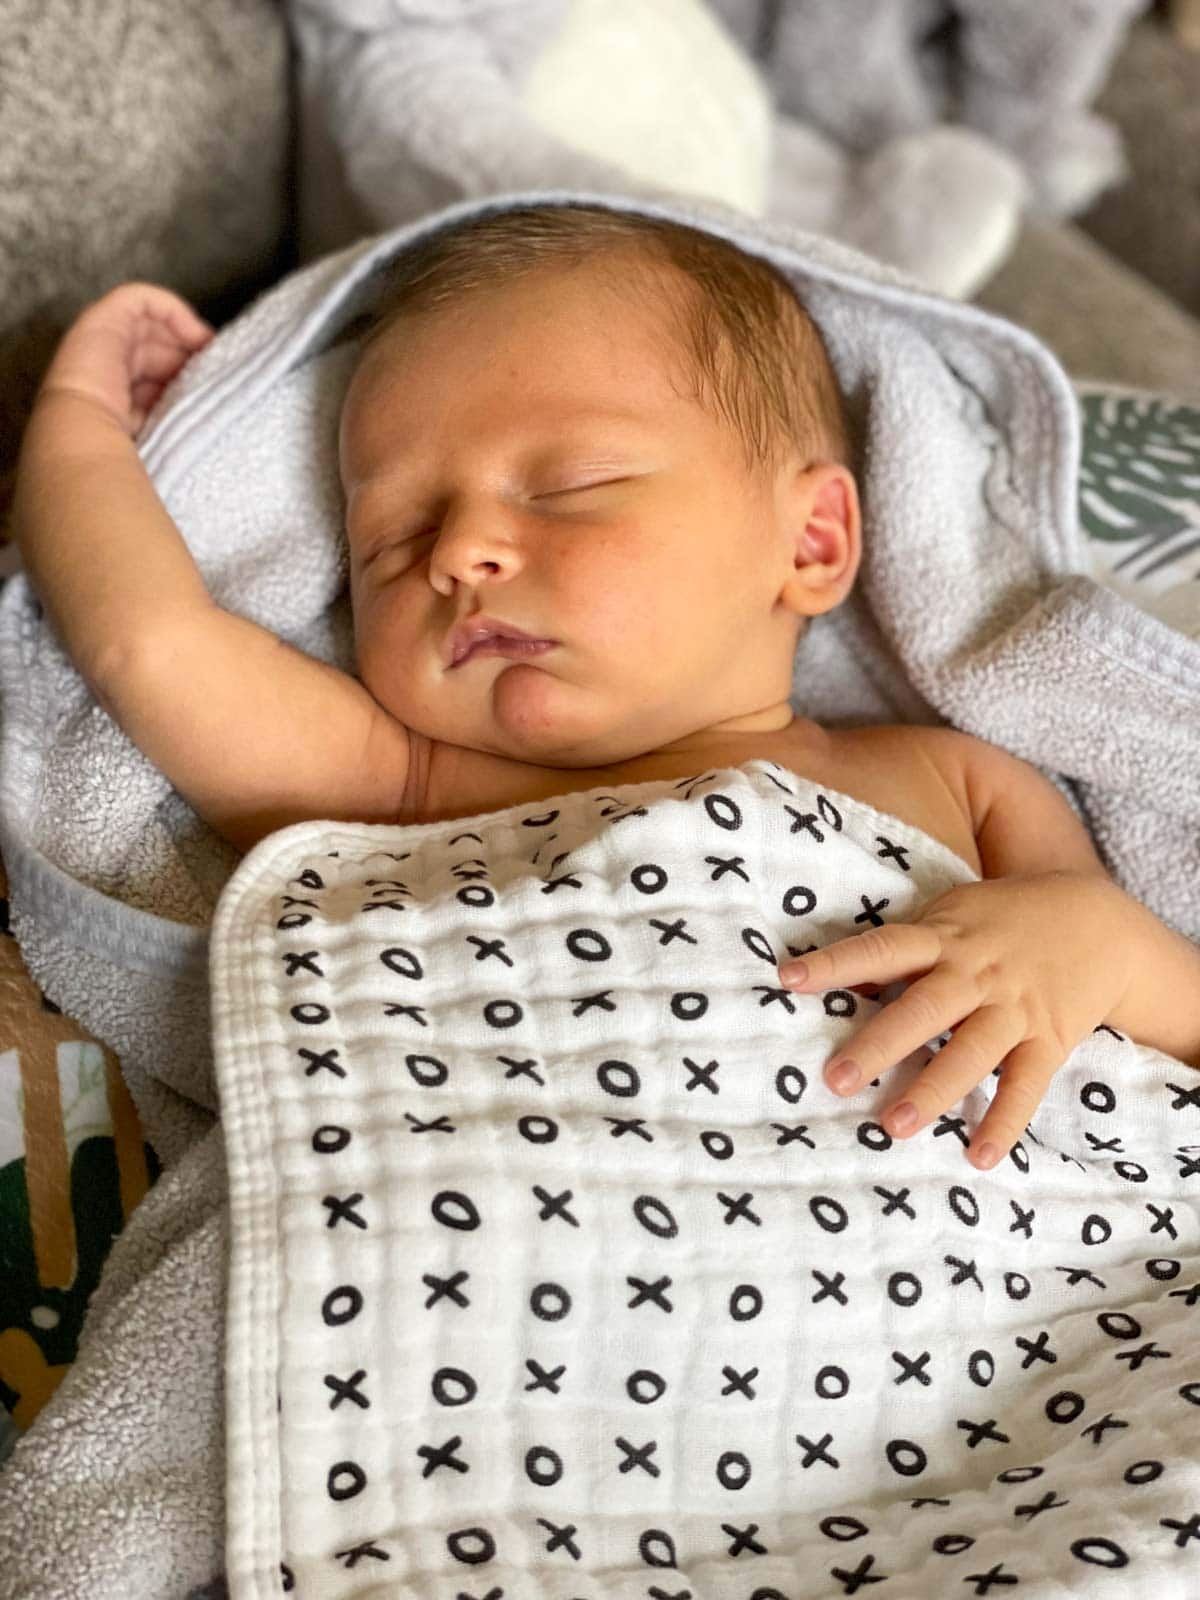 newborn baby with arm raised above head sleeping on white towel